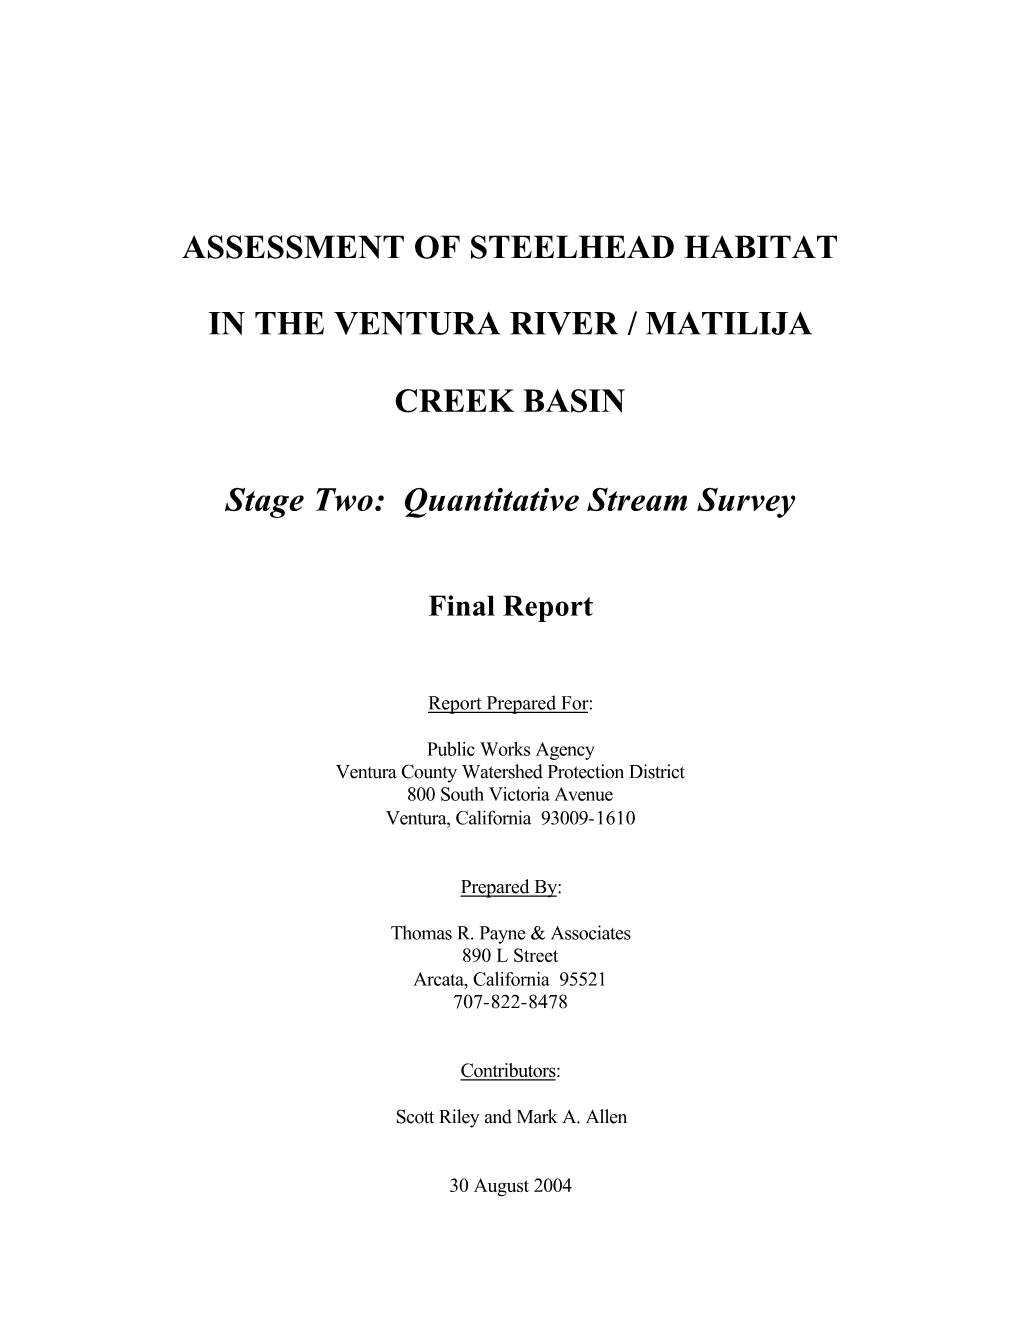 Assessment of Steelhead Habitat in the Ventura River